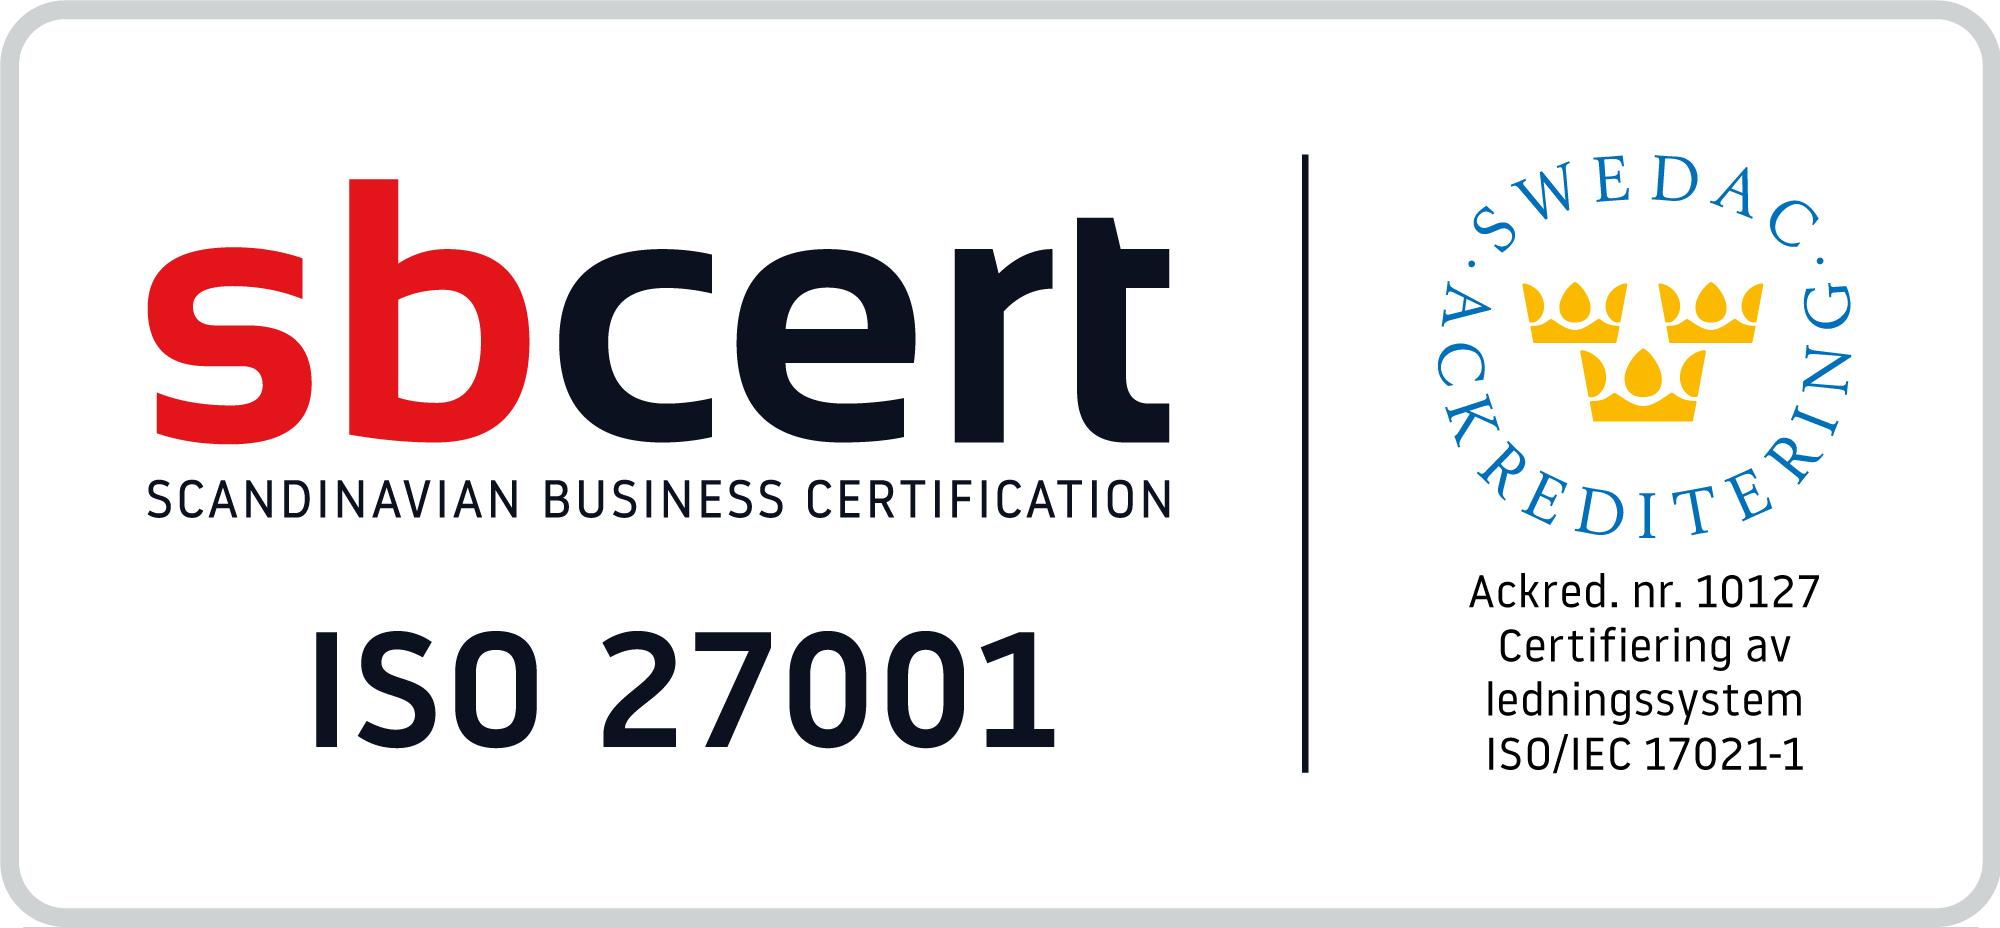 SB Modular finance certificate 27001